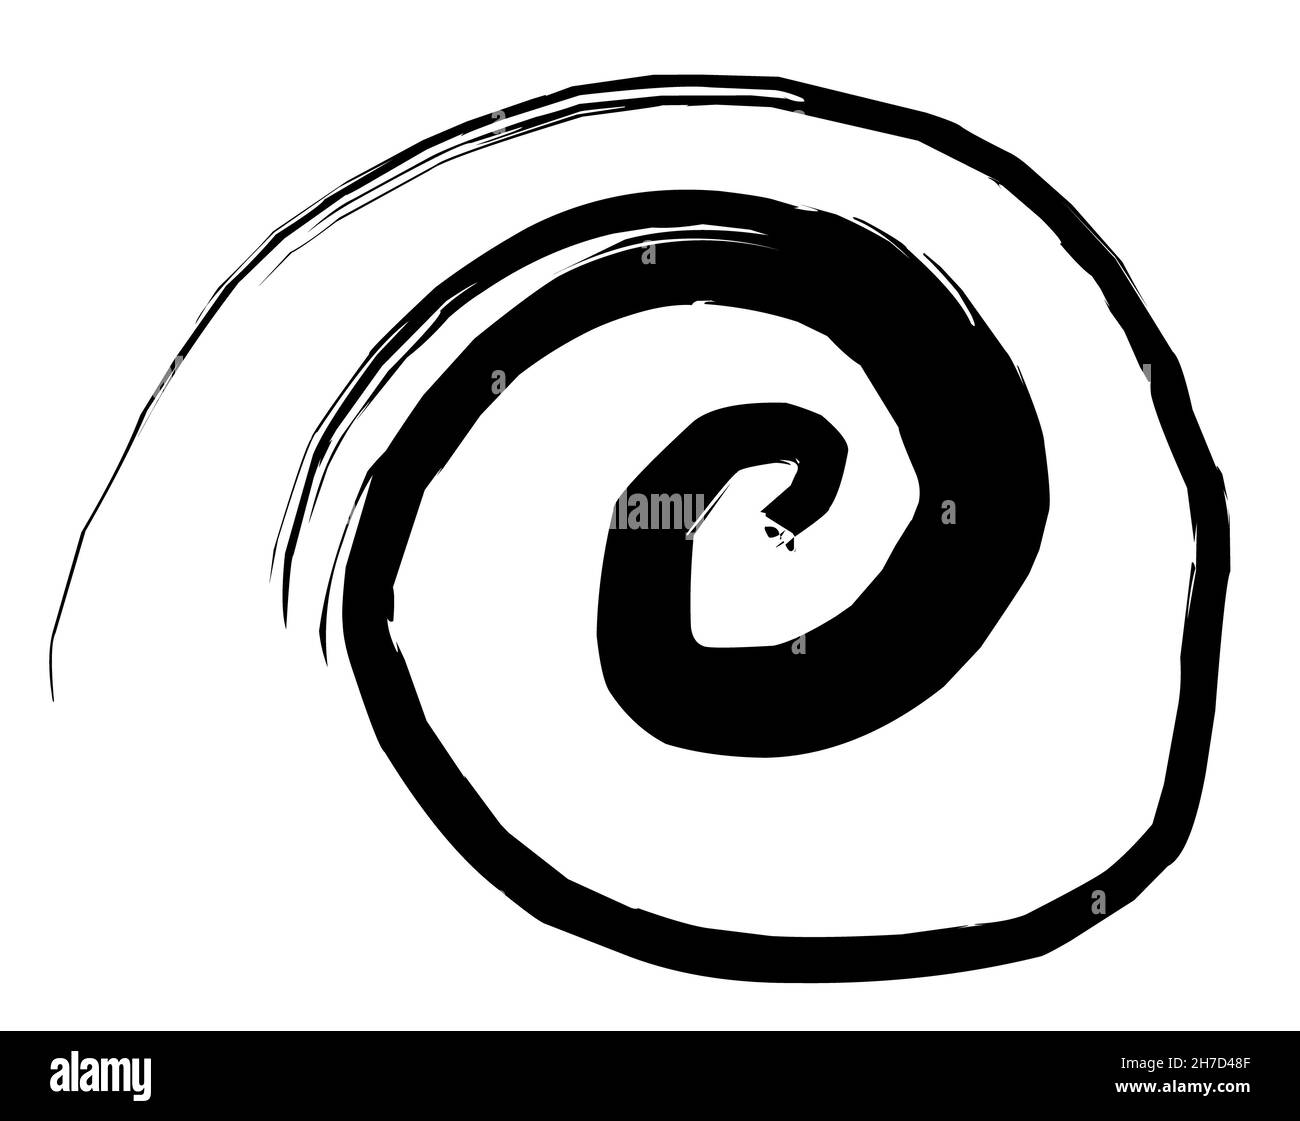 Sketchy vortex vector illustration, sketchy ink sign Stock Photo